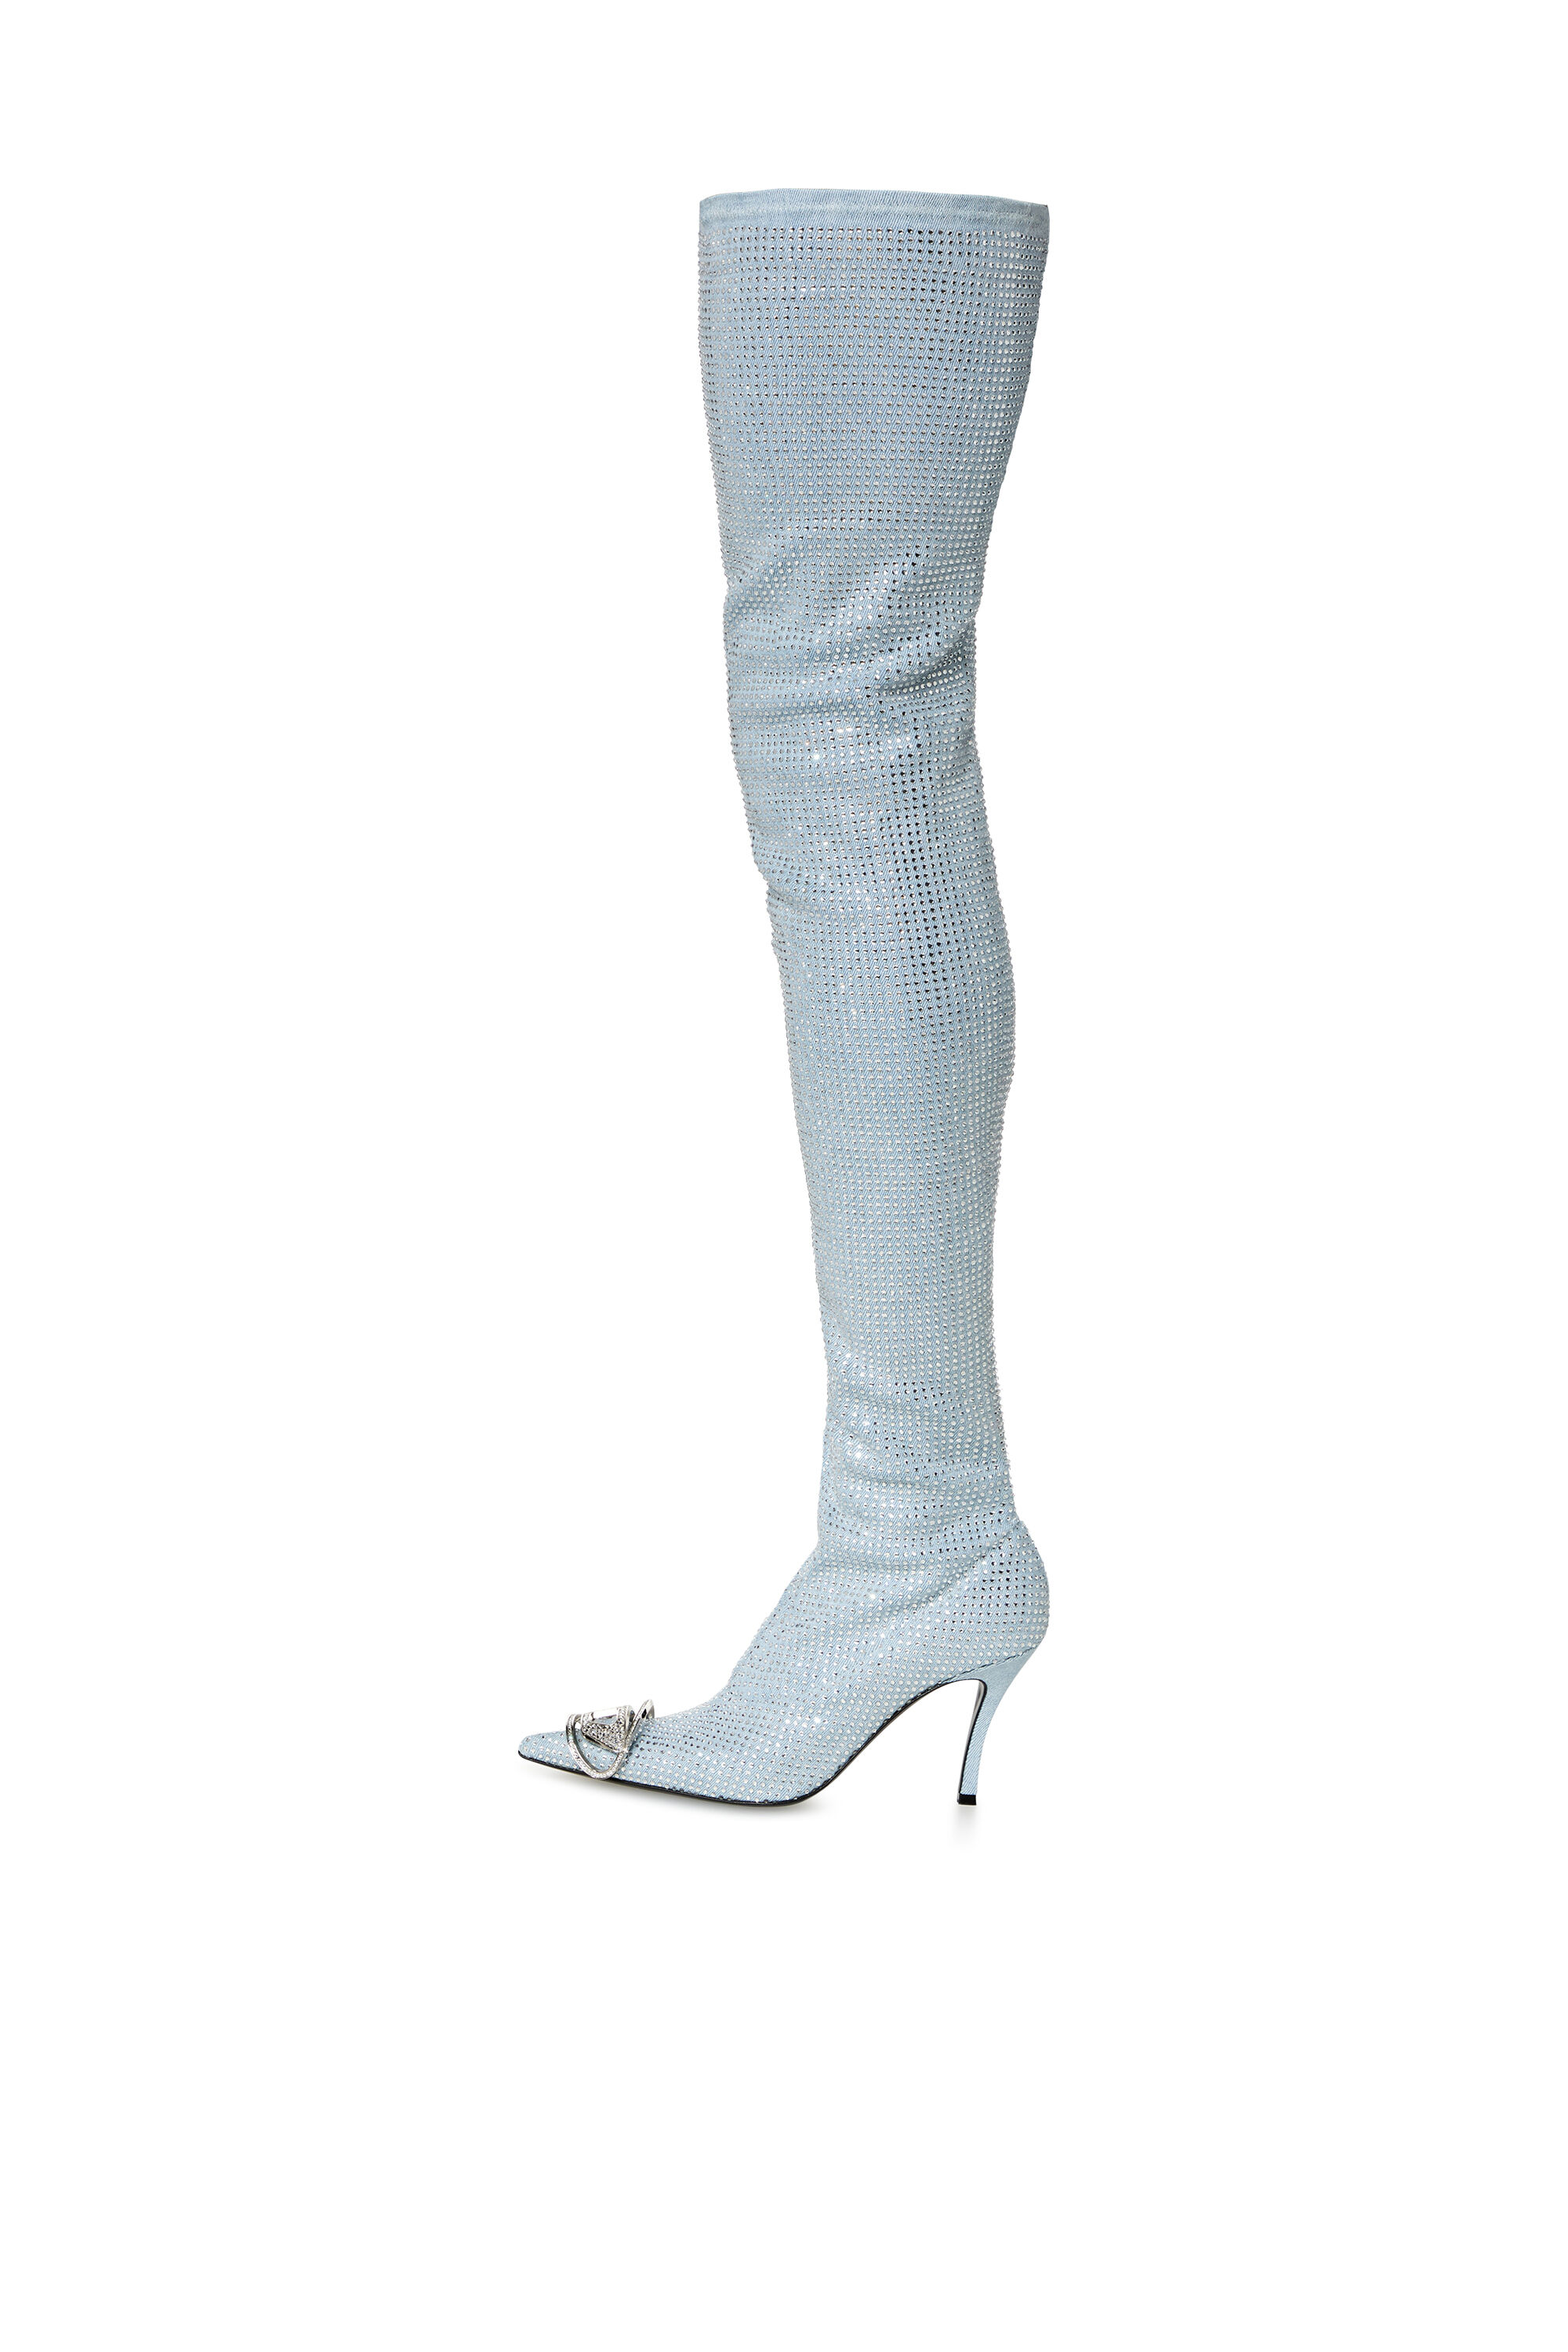 Diesel - D-VENUS TBT, Woman D-Venus Tbt Boots - Over-the-knee boots in rhinestone denim in Blue - Image 6